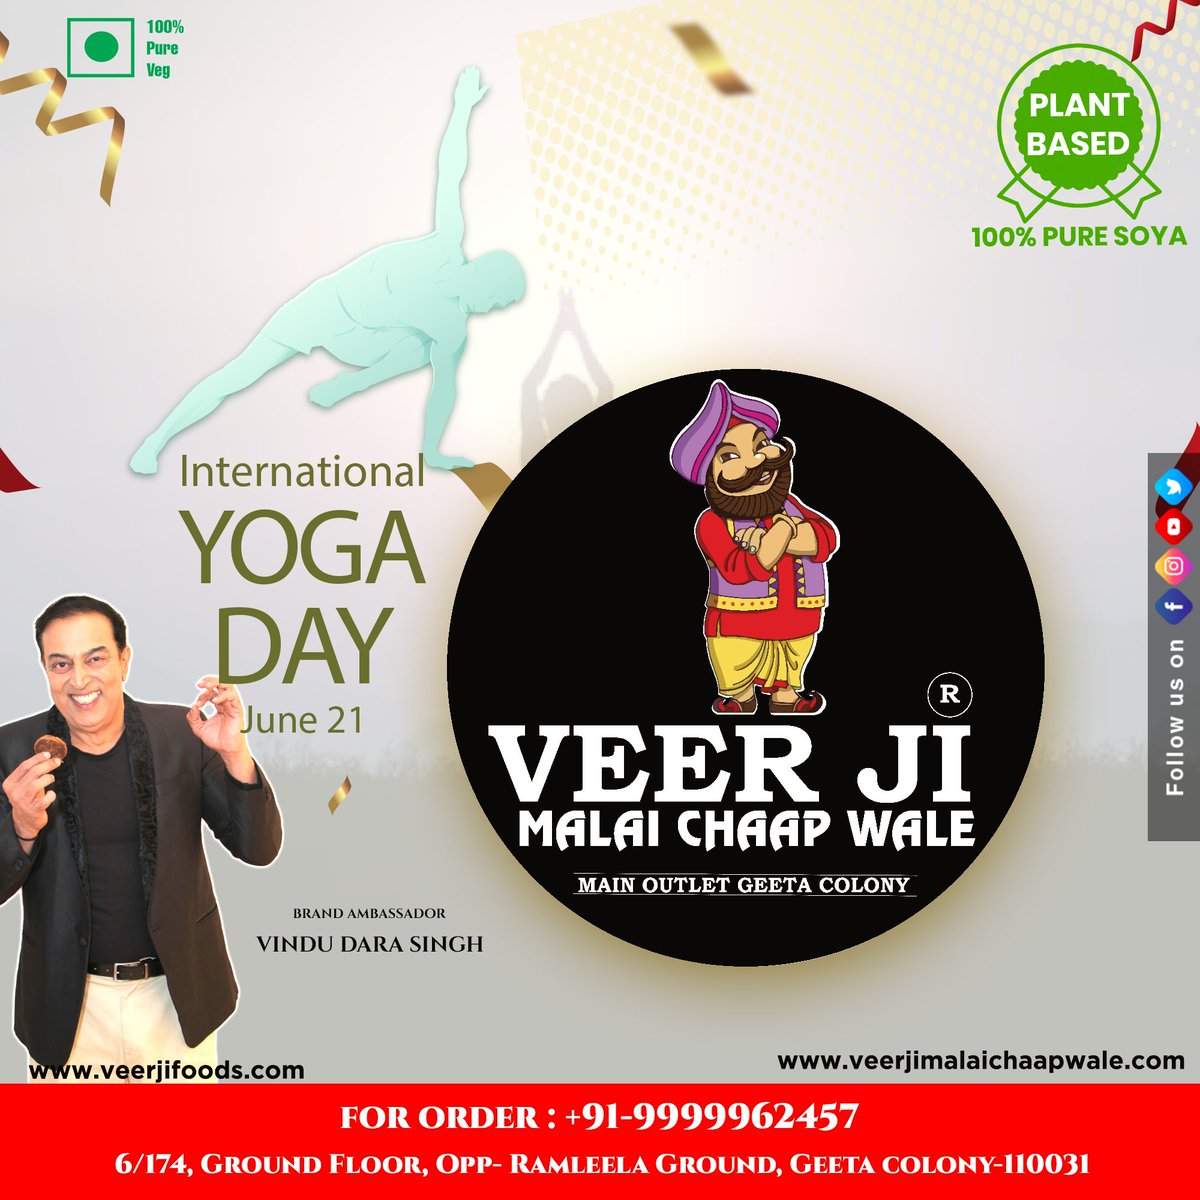 Happy Internatonal Yoga Day with #veerjimalaichaapwalegeetacolony
.
.

For Order : 9999962457

Main Outlet : Geeta Colony
Add : 6/174, ground Floor, Opp-Ramllea ground, Geeta Colony-110031

For Franchise : 91-9810669403

Website : veerjifoods.com
veerjimalaichaapwale.com